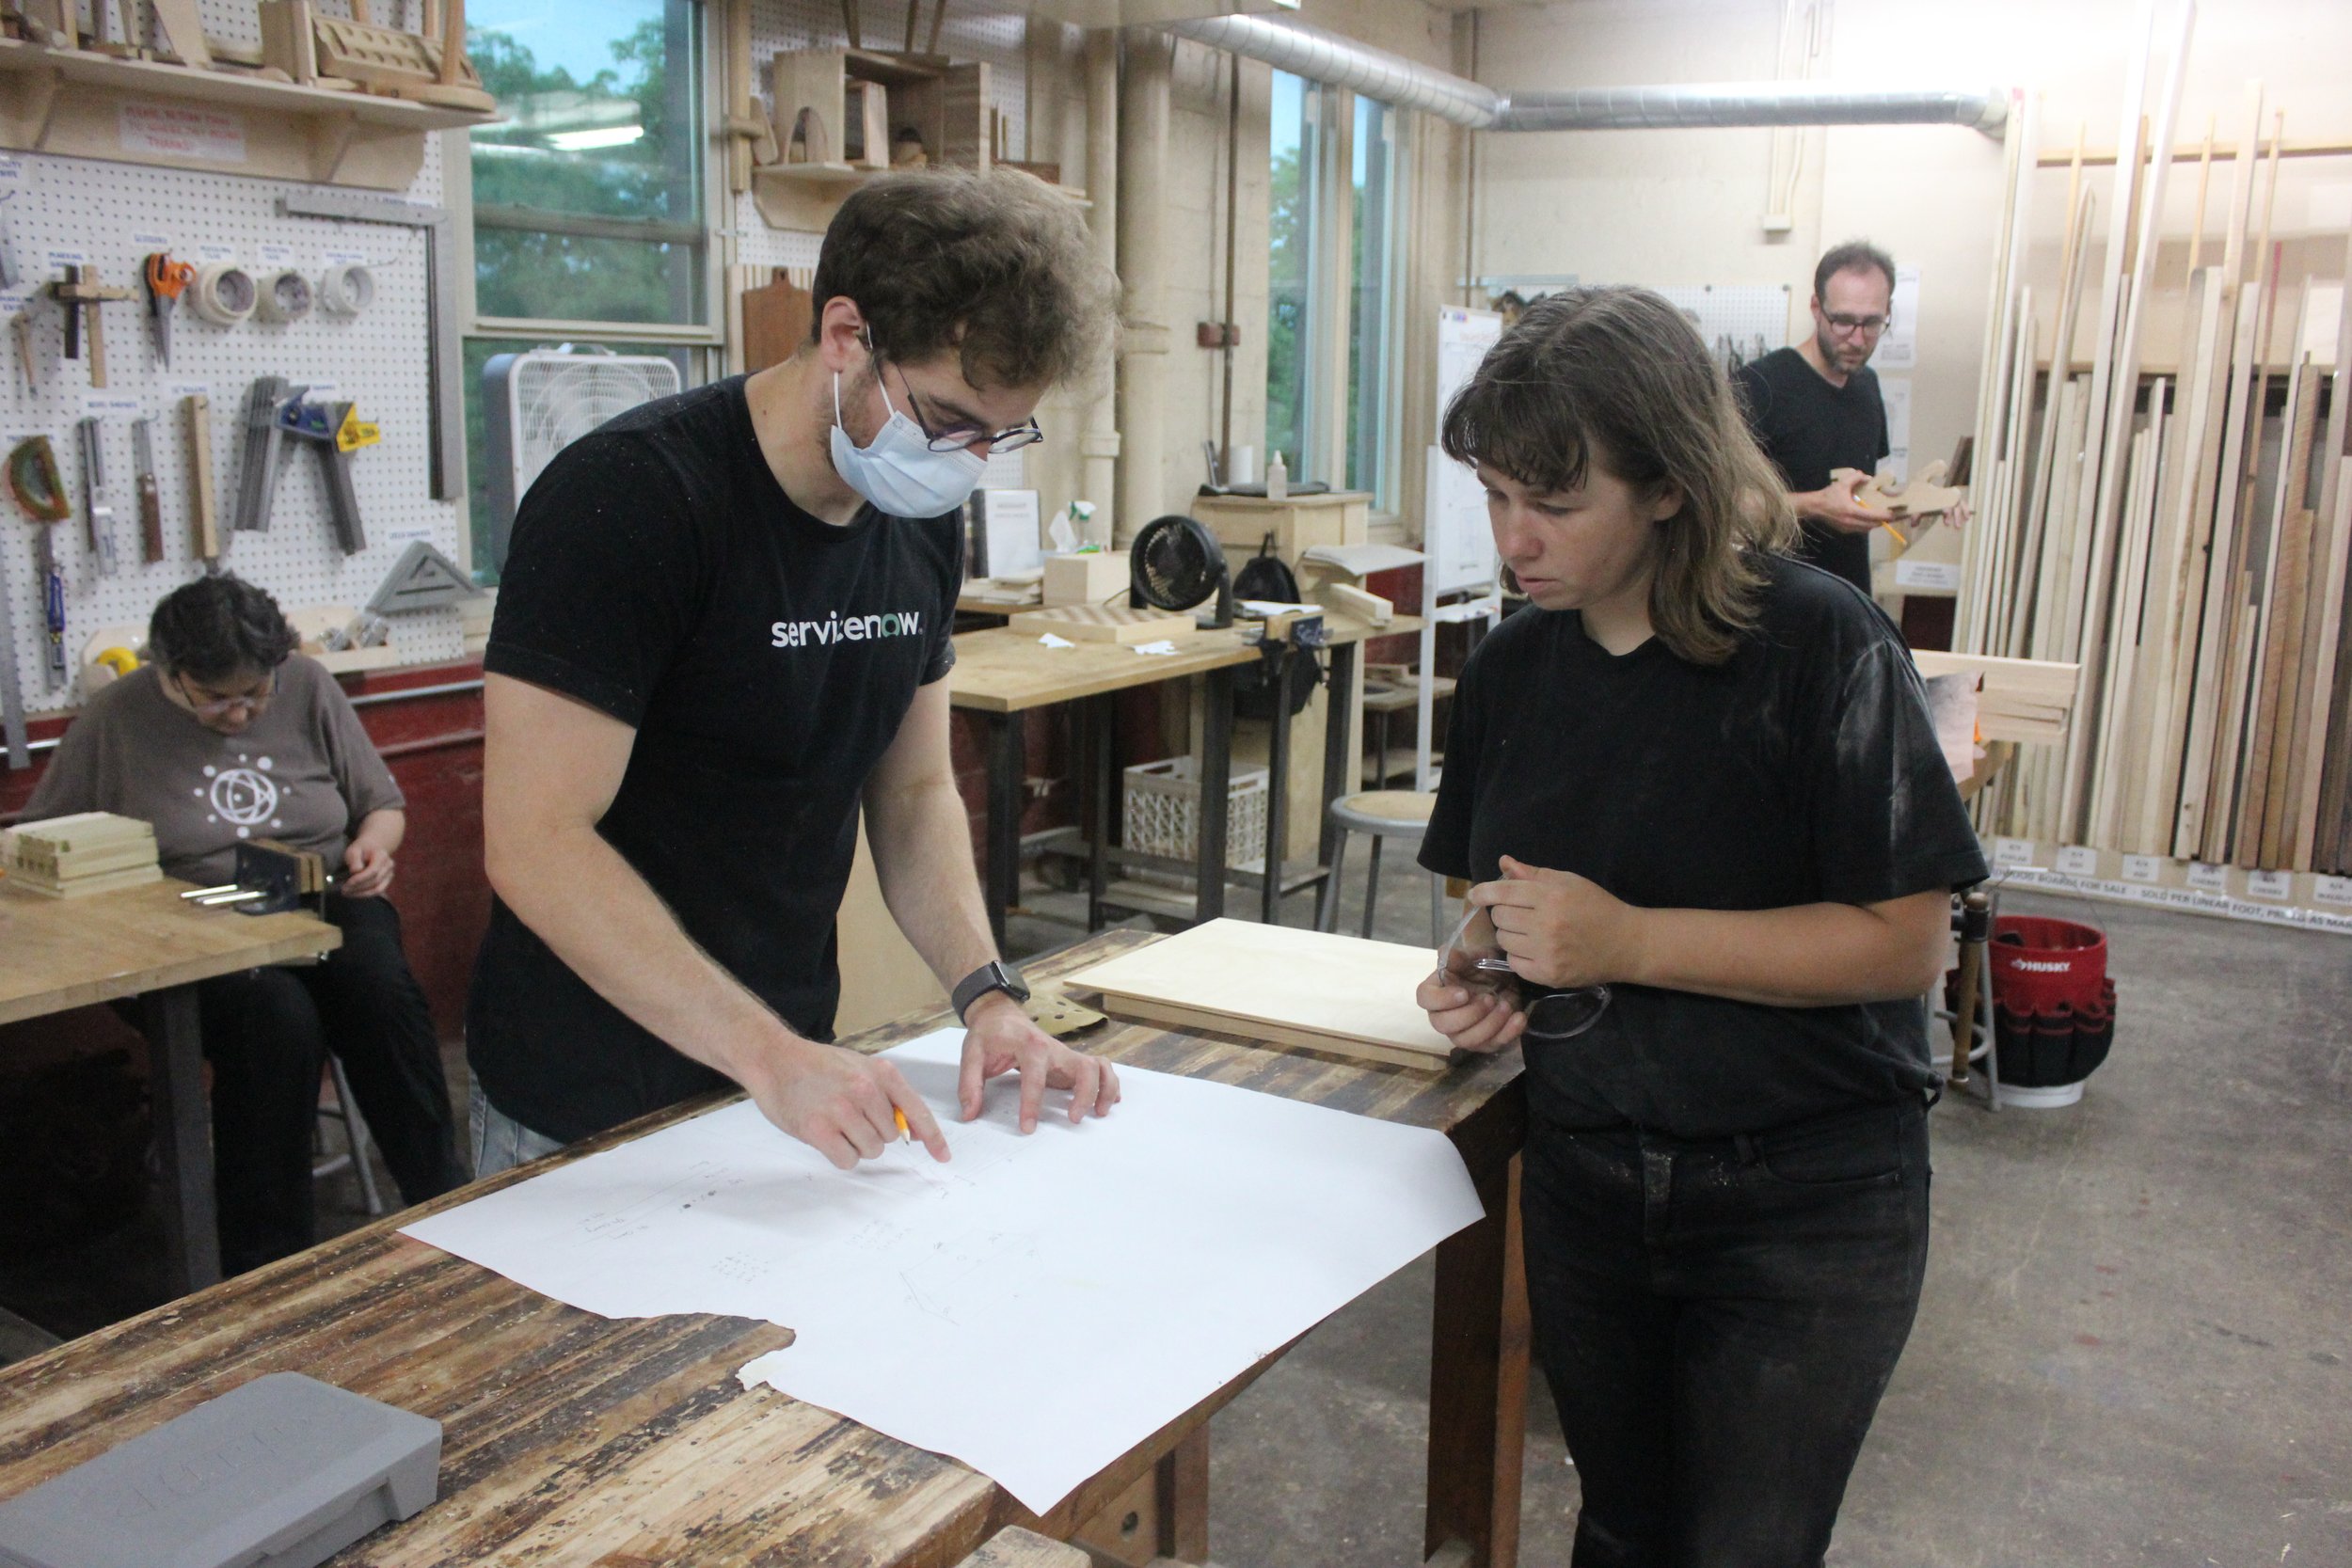 Woodworking — Chicago Industrial Arts & Design Center